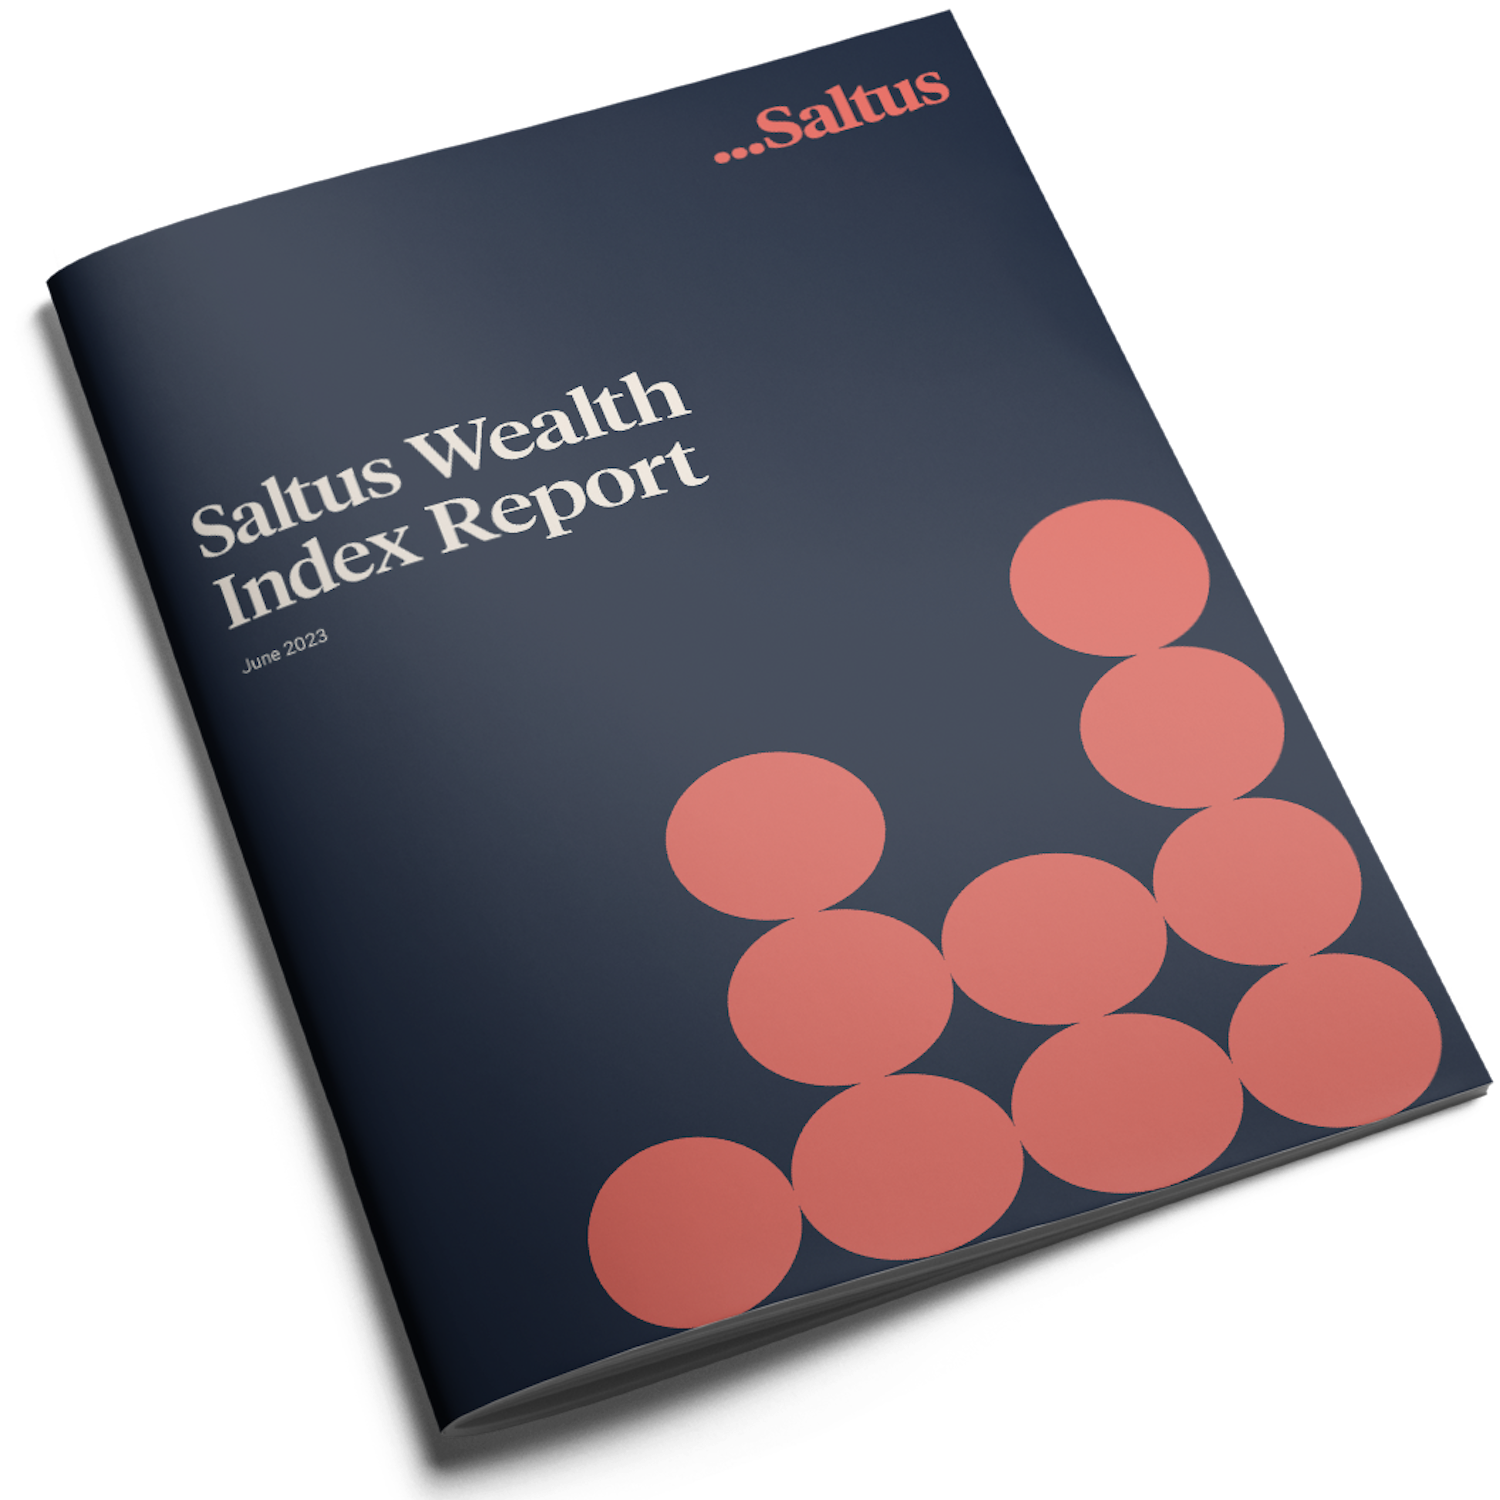 Saltus Wealth Index Report cover June 2023